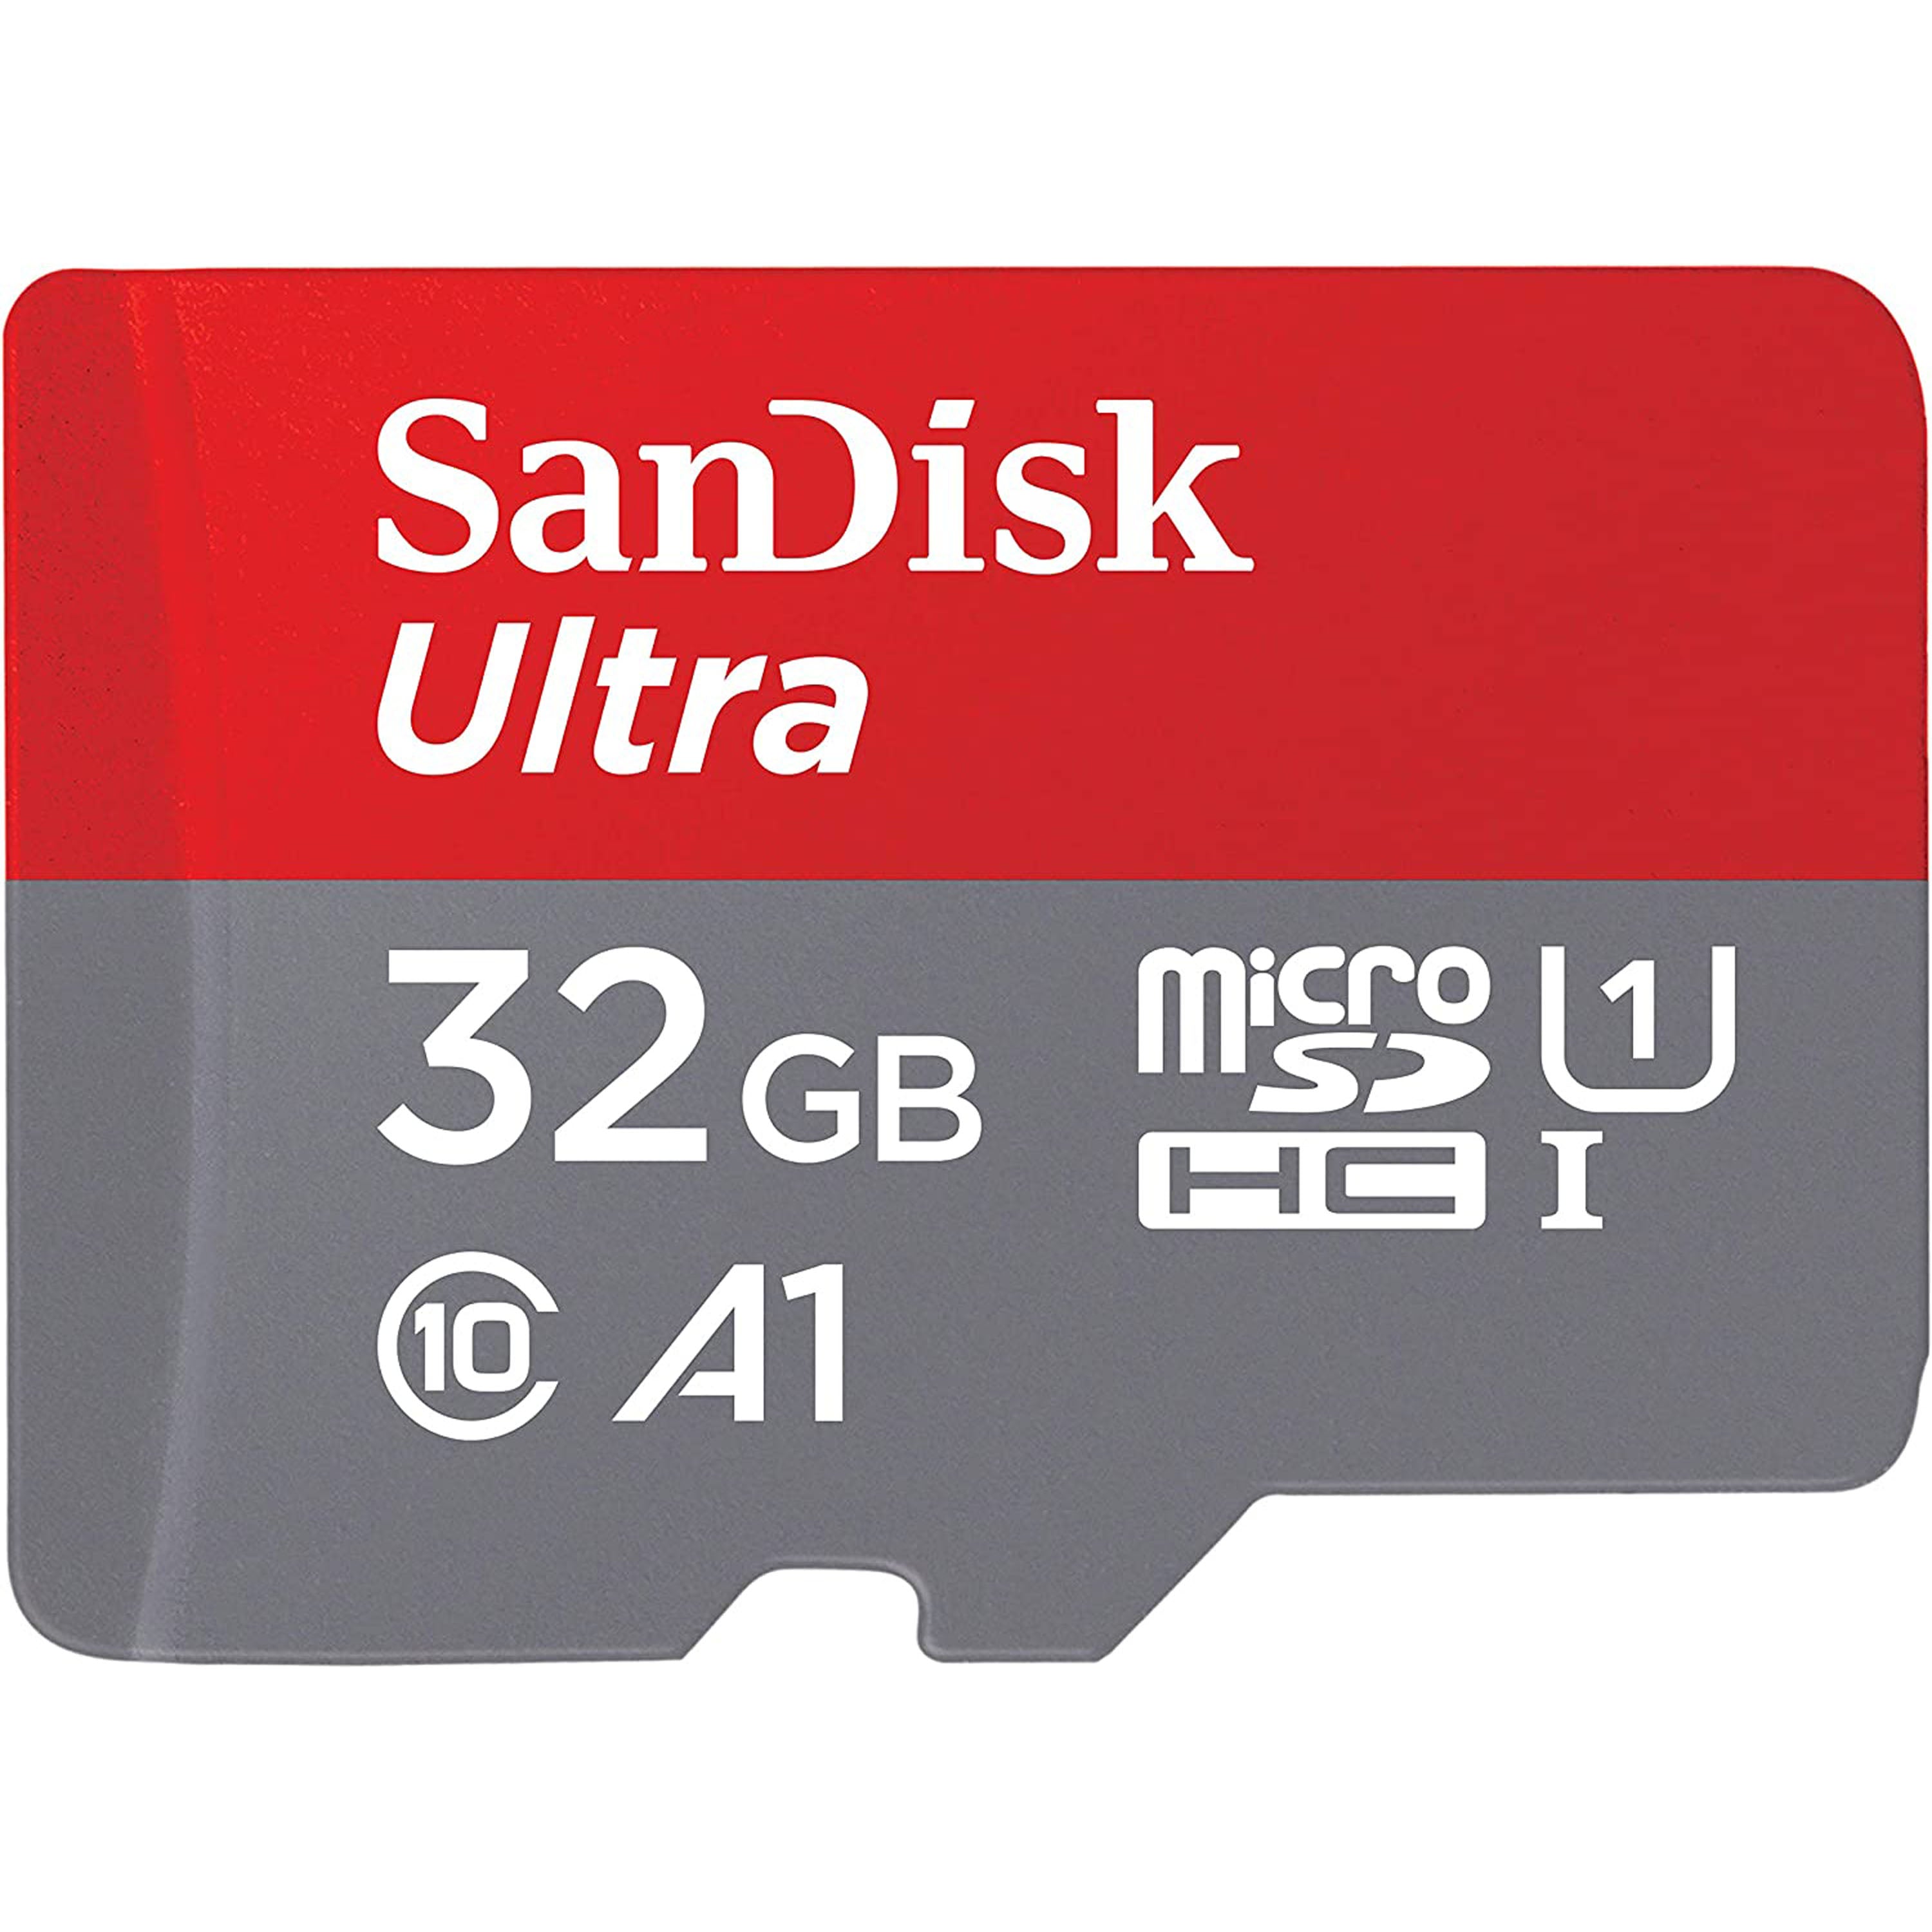 Sandisk Ultra MicroSDHC 32GB 120MB/s UHS-I